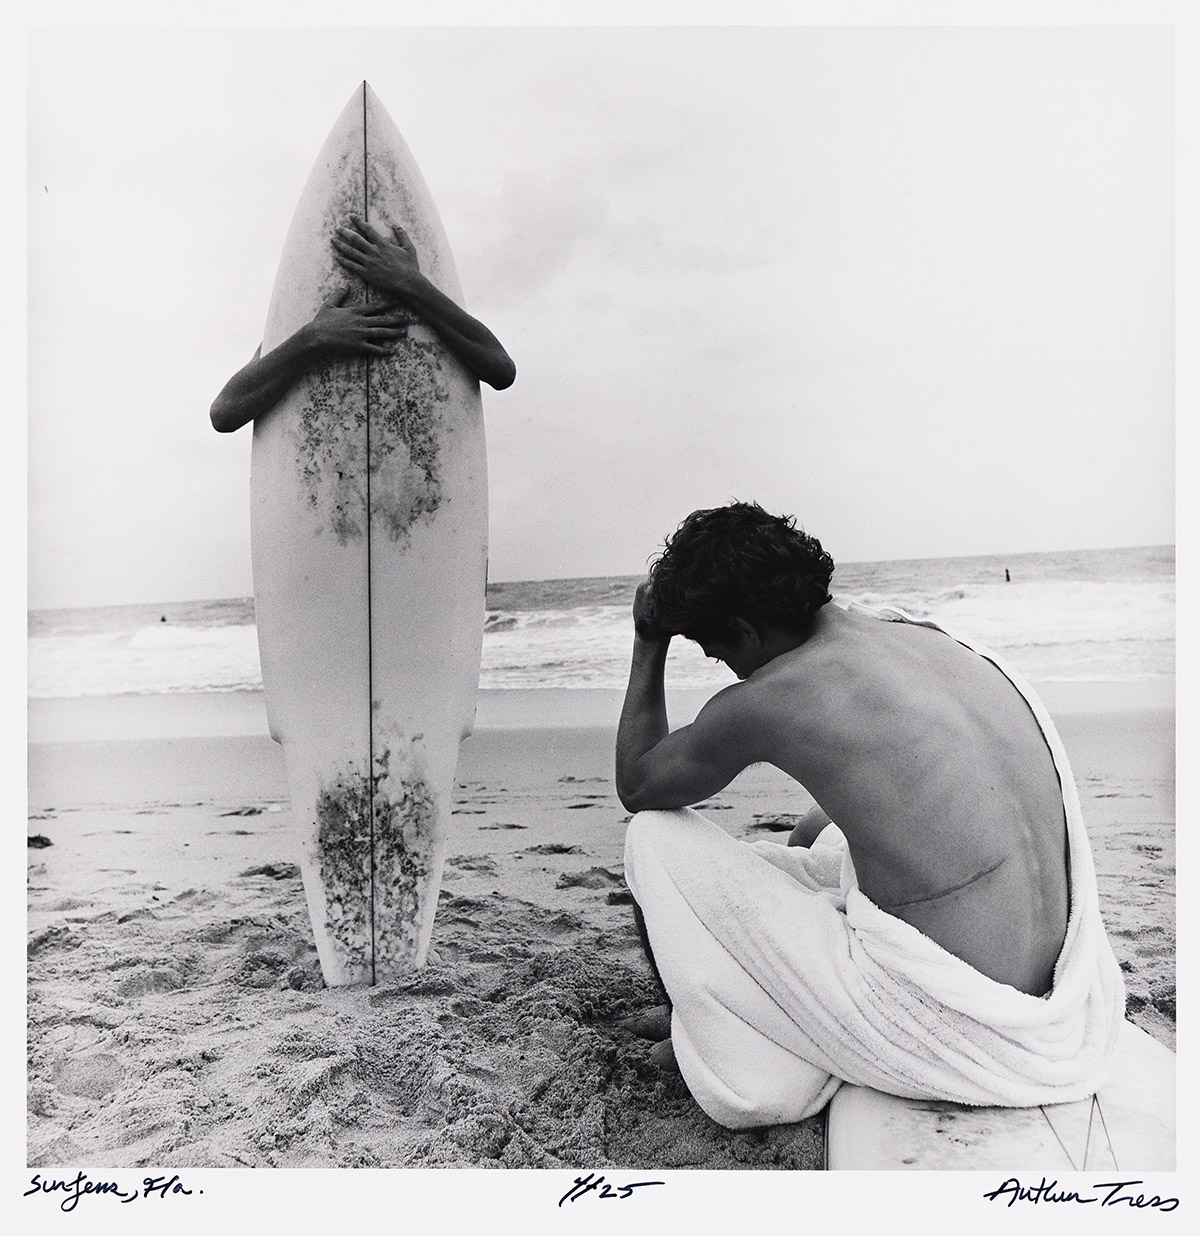 ARTHUR TRESS (1940- ) Surfers, Florida.